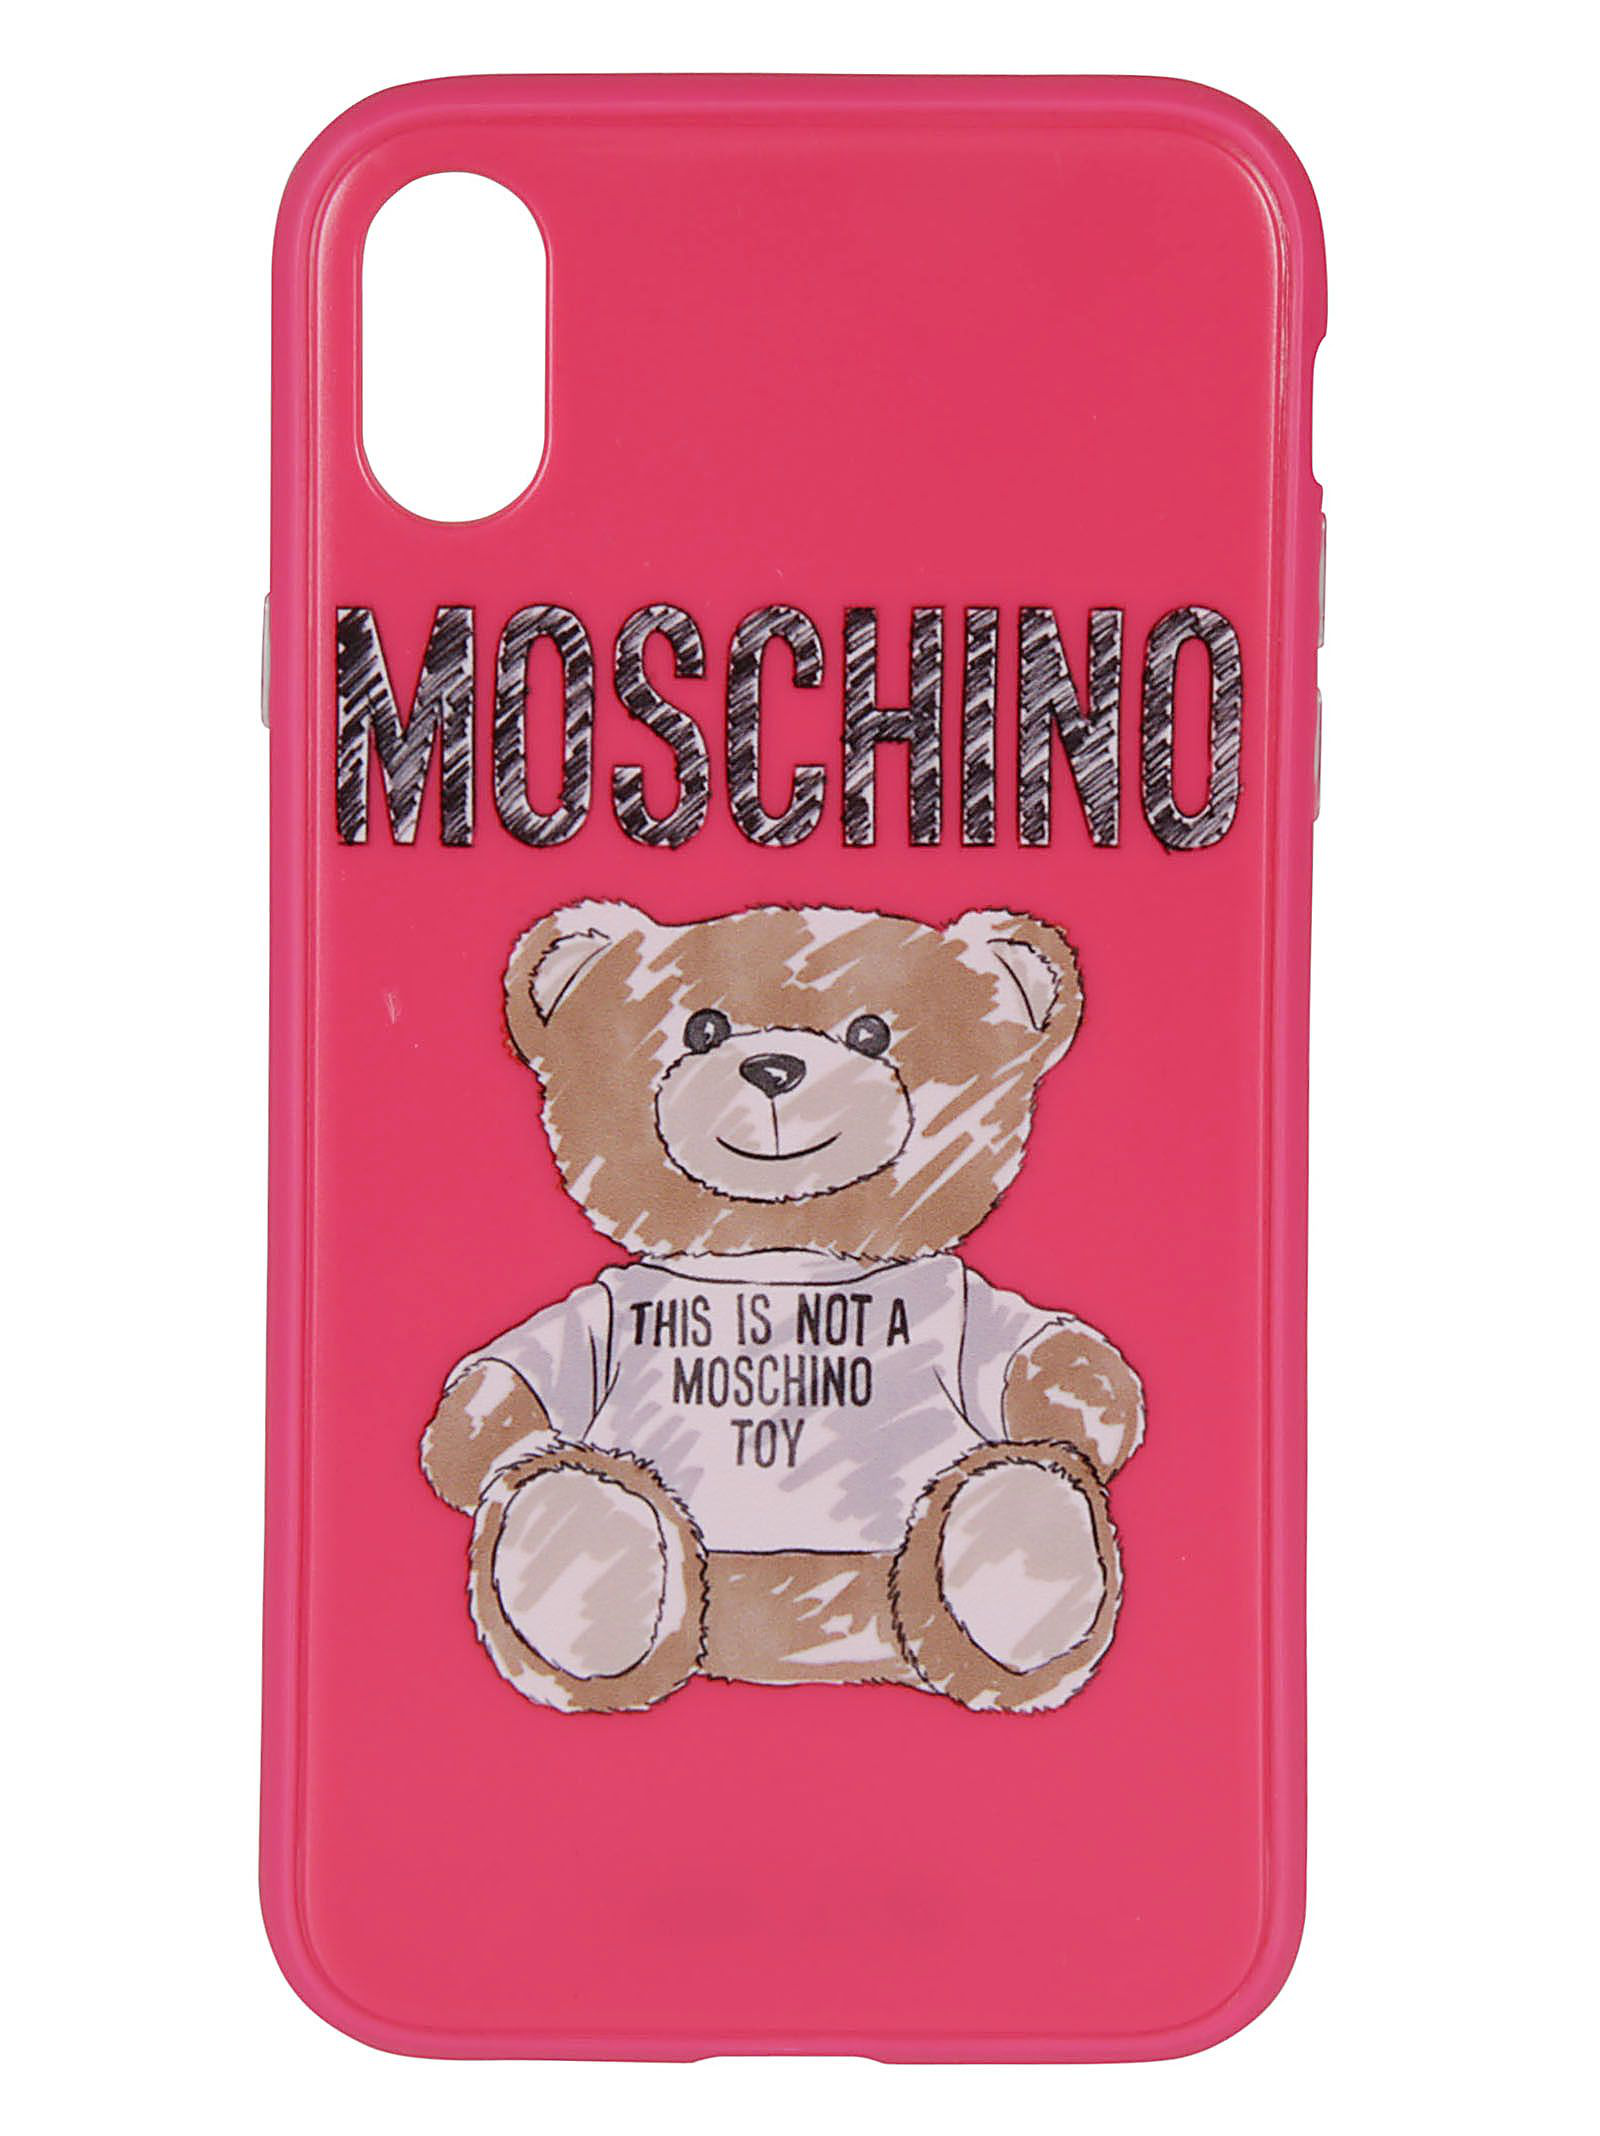 Moschino Teddy Iphone Xr Case | ModeSens